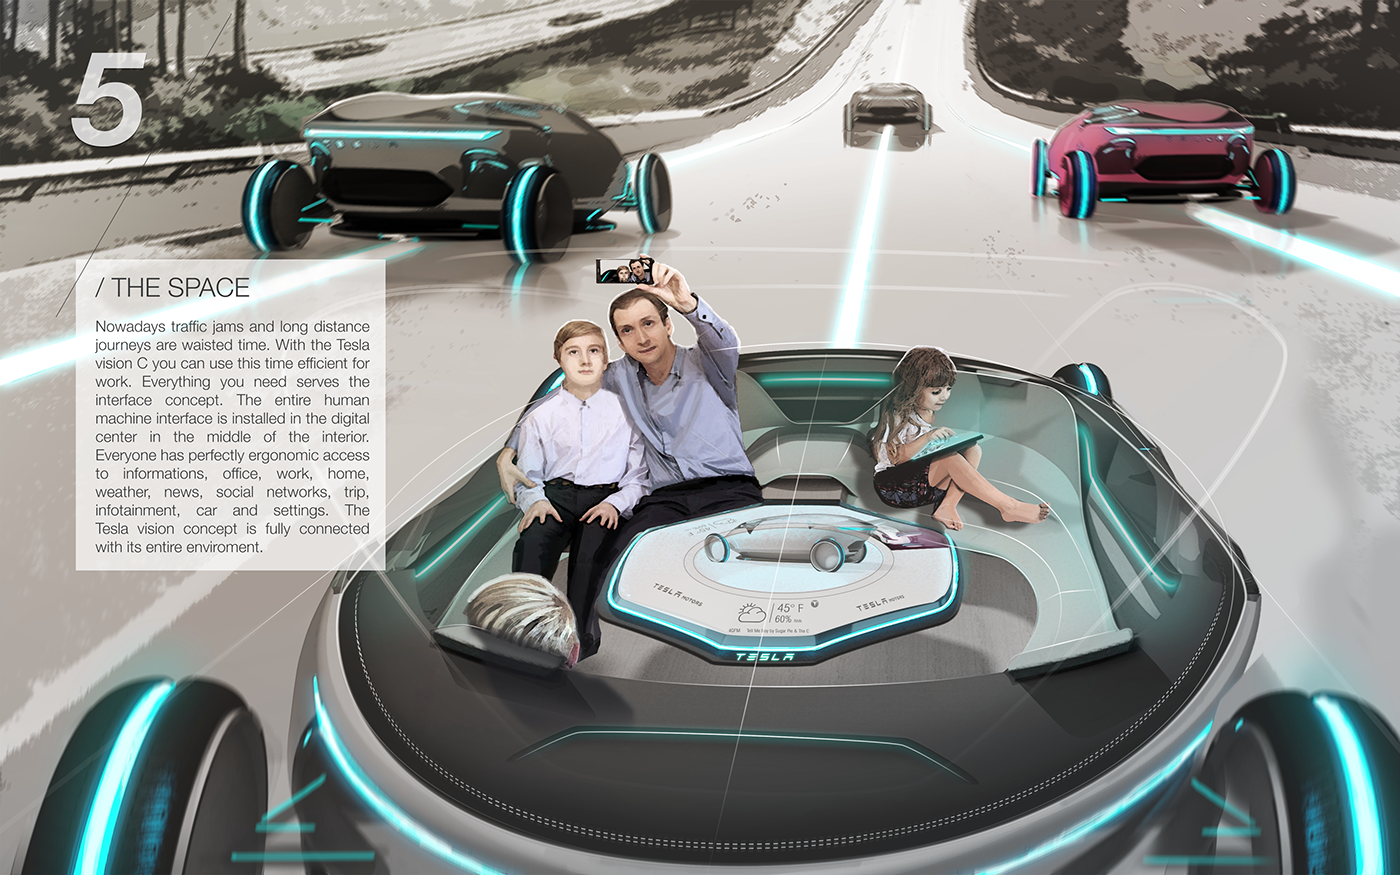 tesla 2040. autonomous drive future car